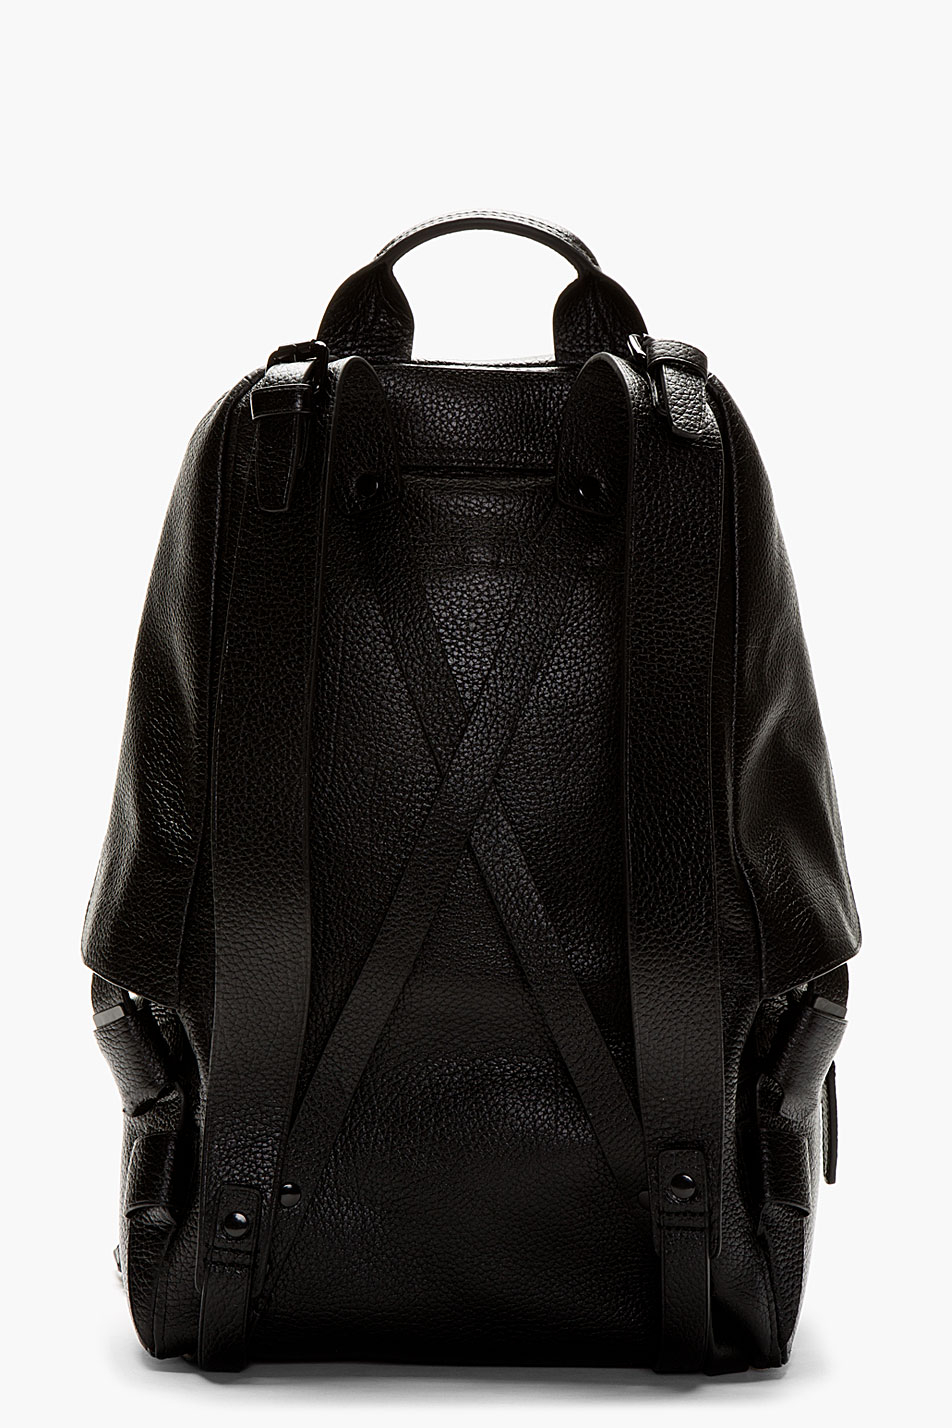 3.1 phillip lim Black Grained Leather Biker Backpack in Black for Men ...